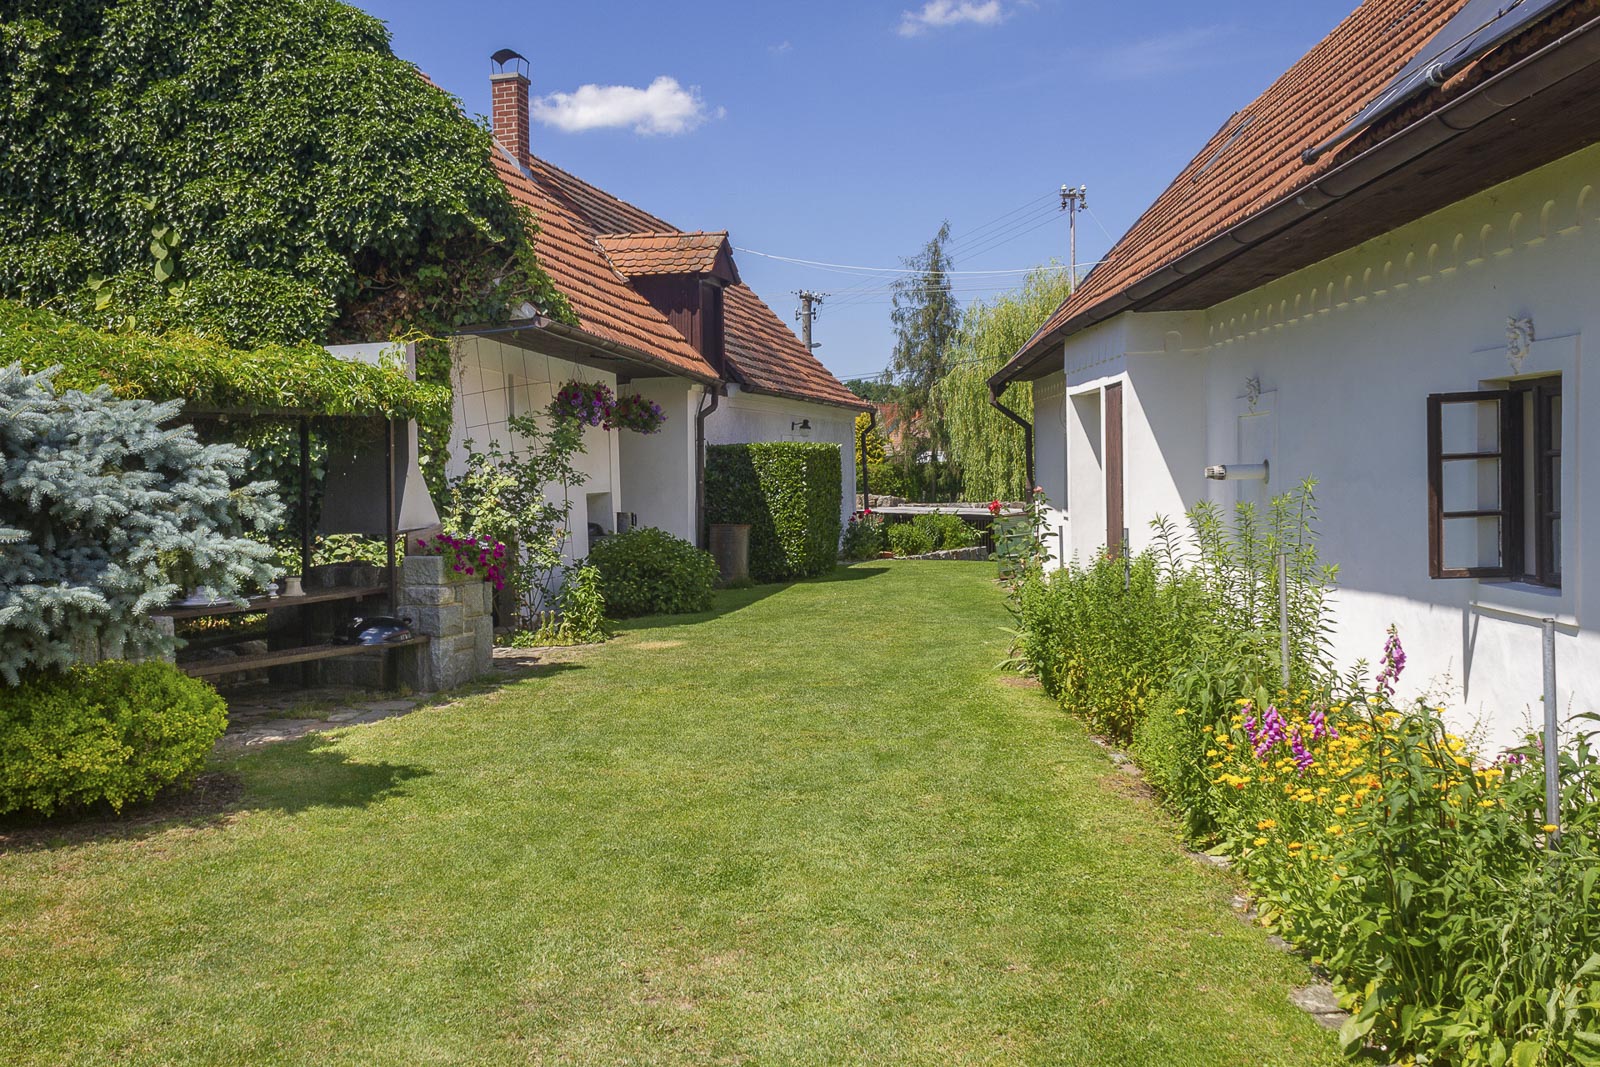 Court yard - cottage in Czech Republic